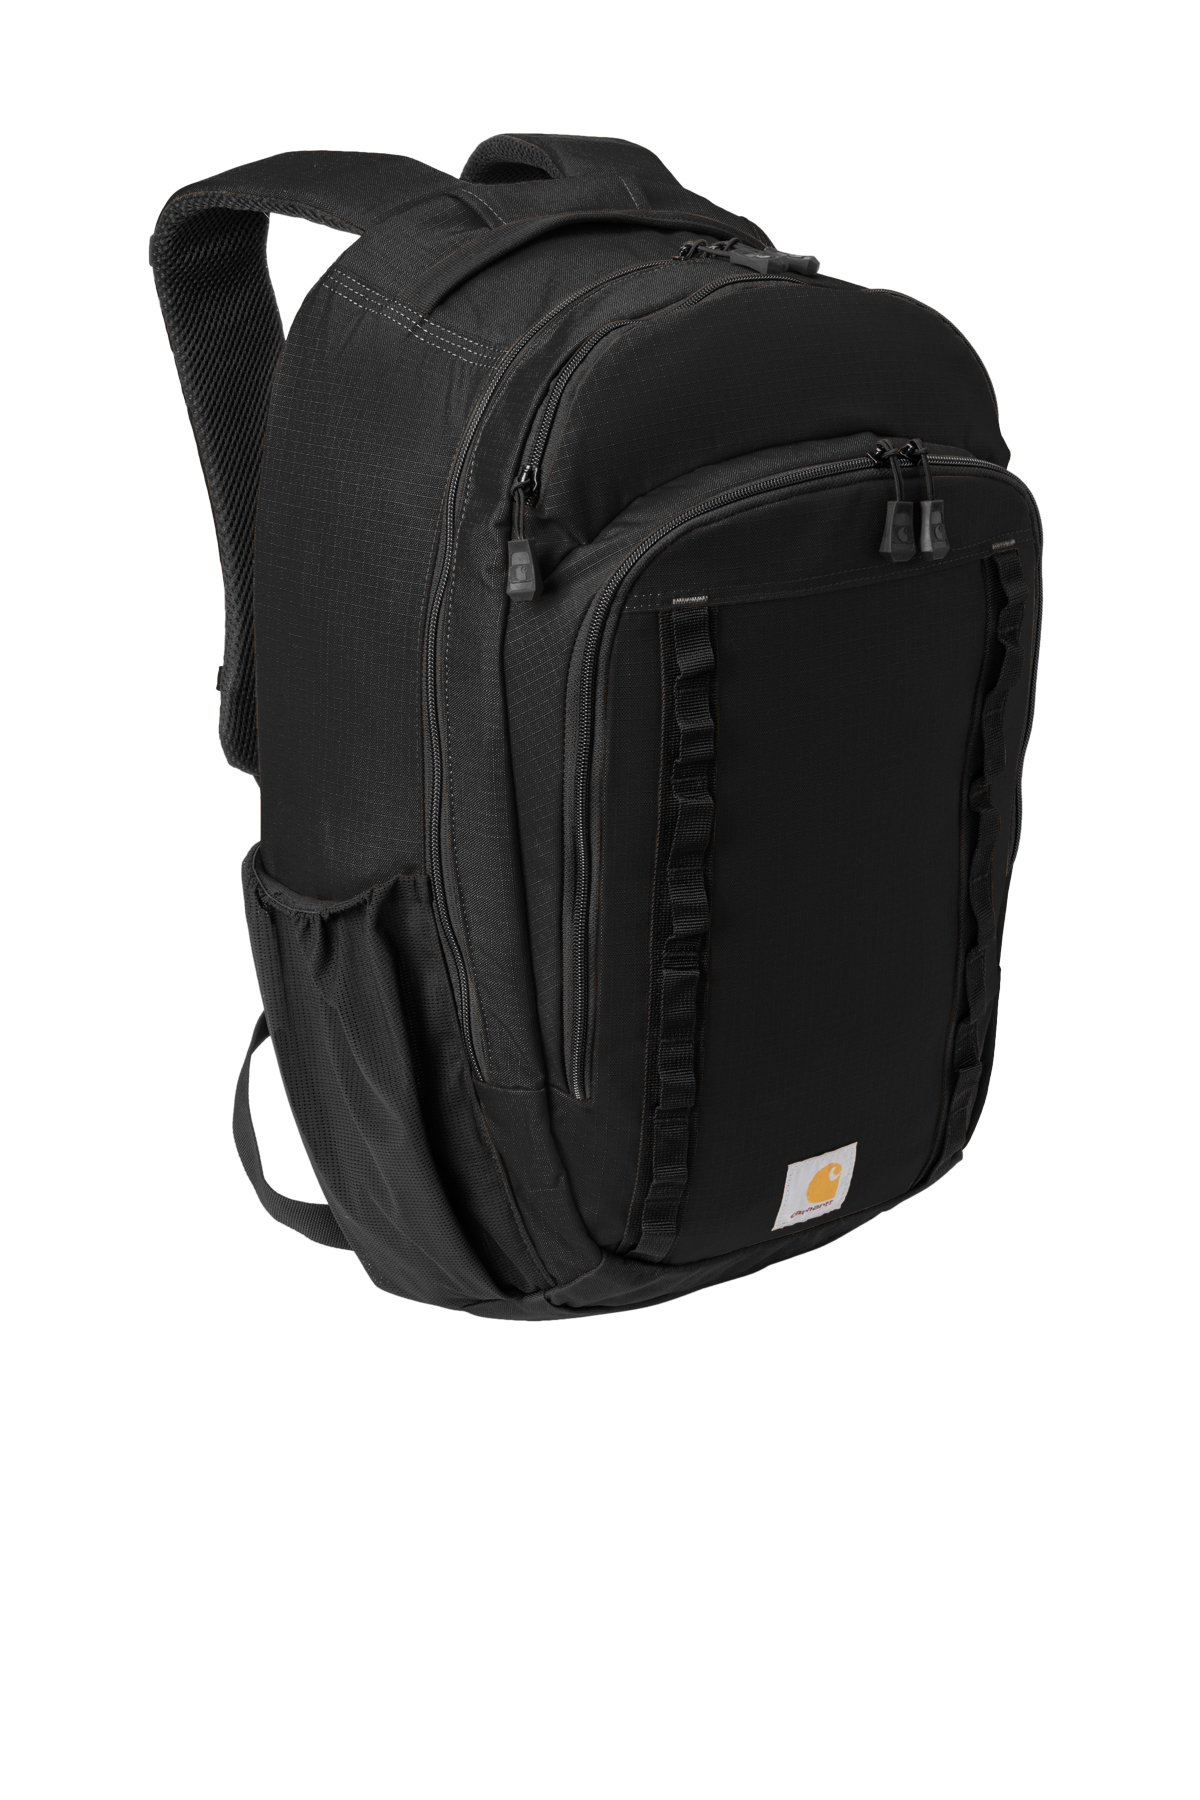 Carhartt 25L Ripstop Backpack | Product | SanMar